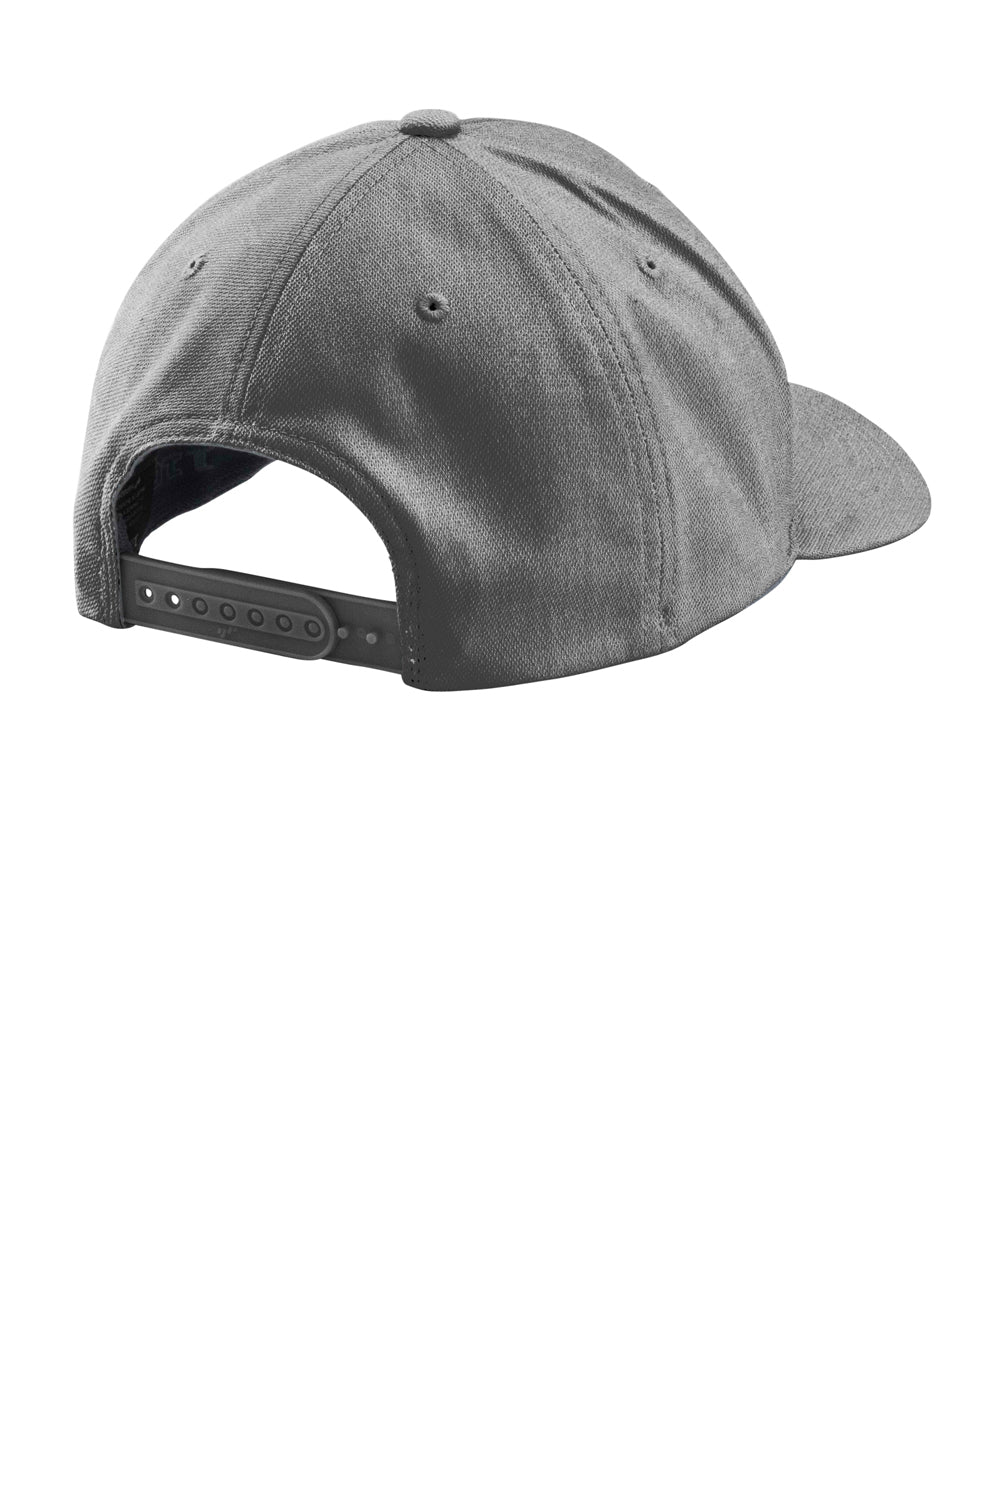 TravisMathew TM1MY391  FOMO Solid Adjustable Hat Heather Quiet Shade Grey Flat Back